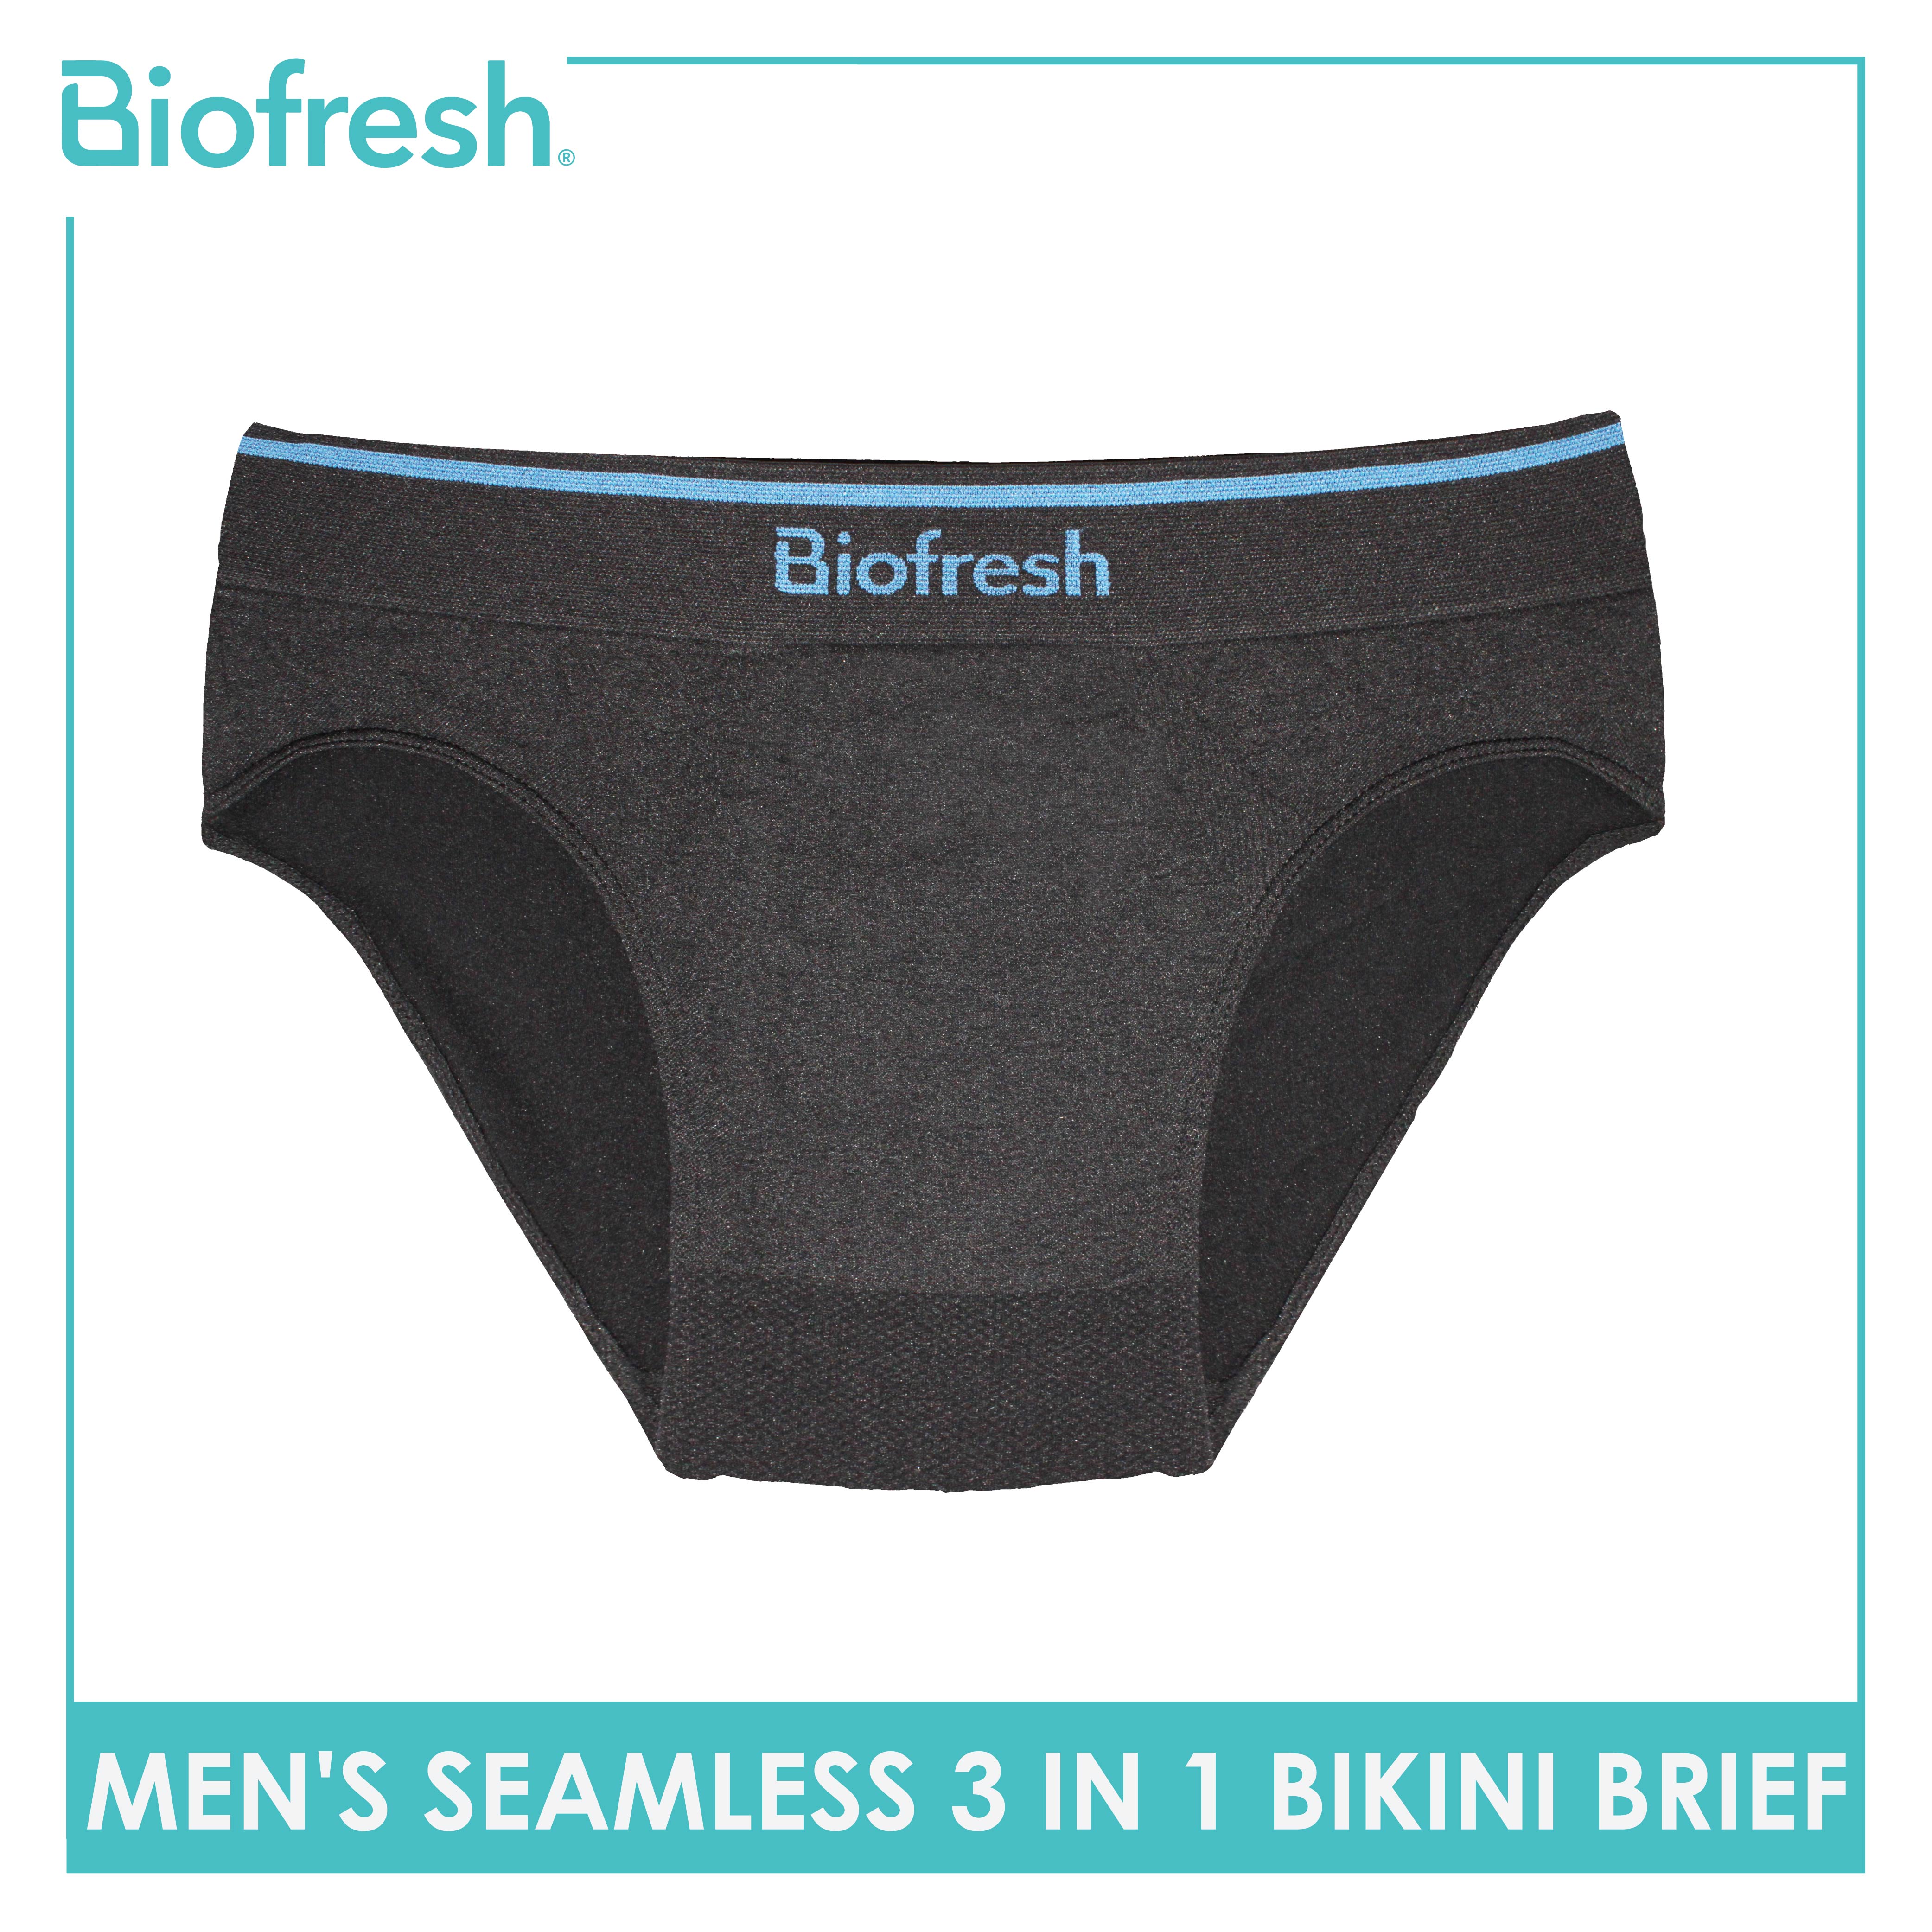 Buy Biofresh Biofresh Men's Antimicrobial Cotton Bikini Brief 3